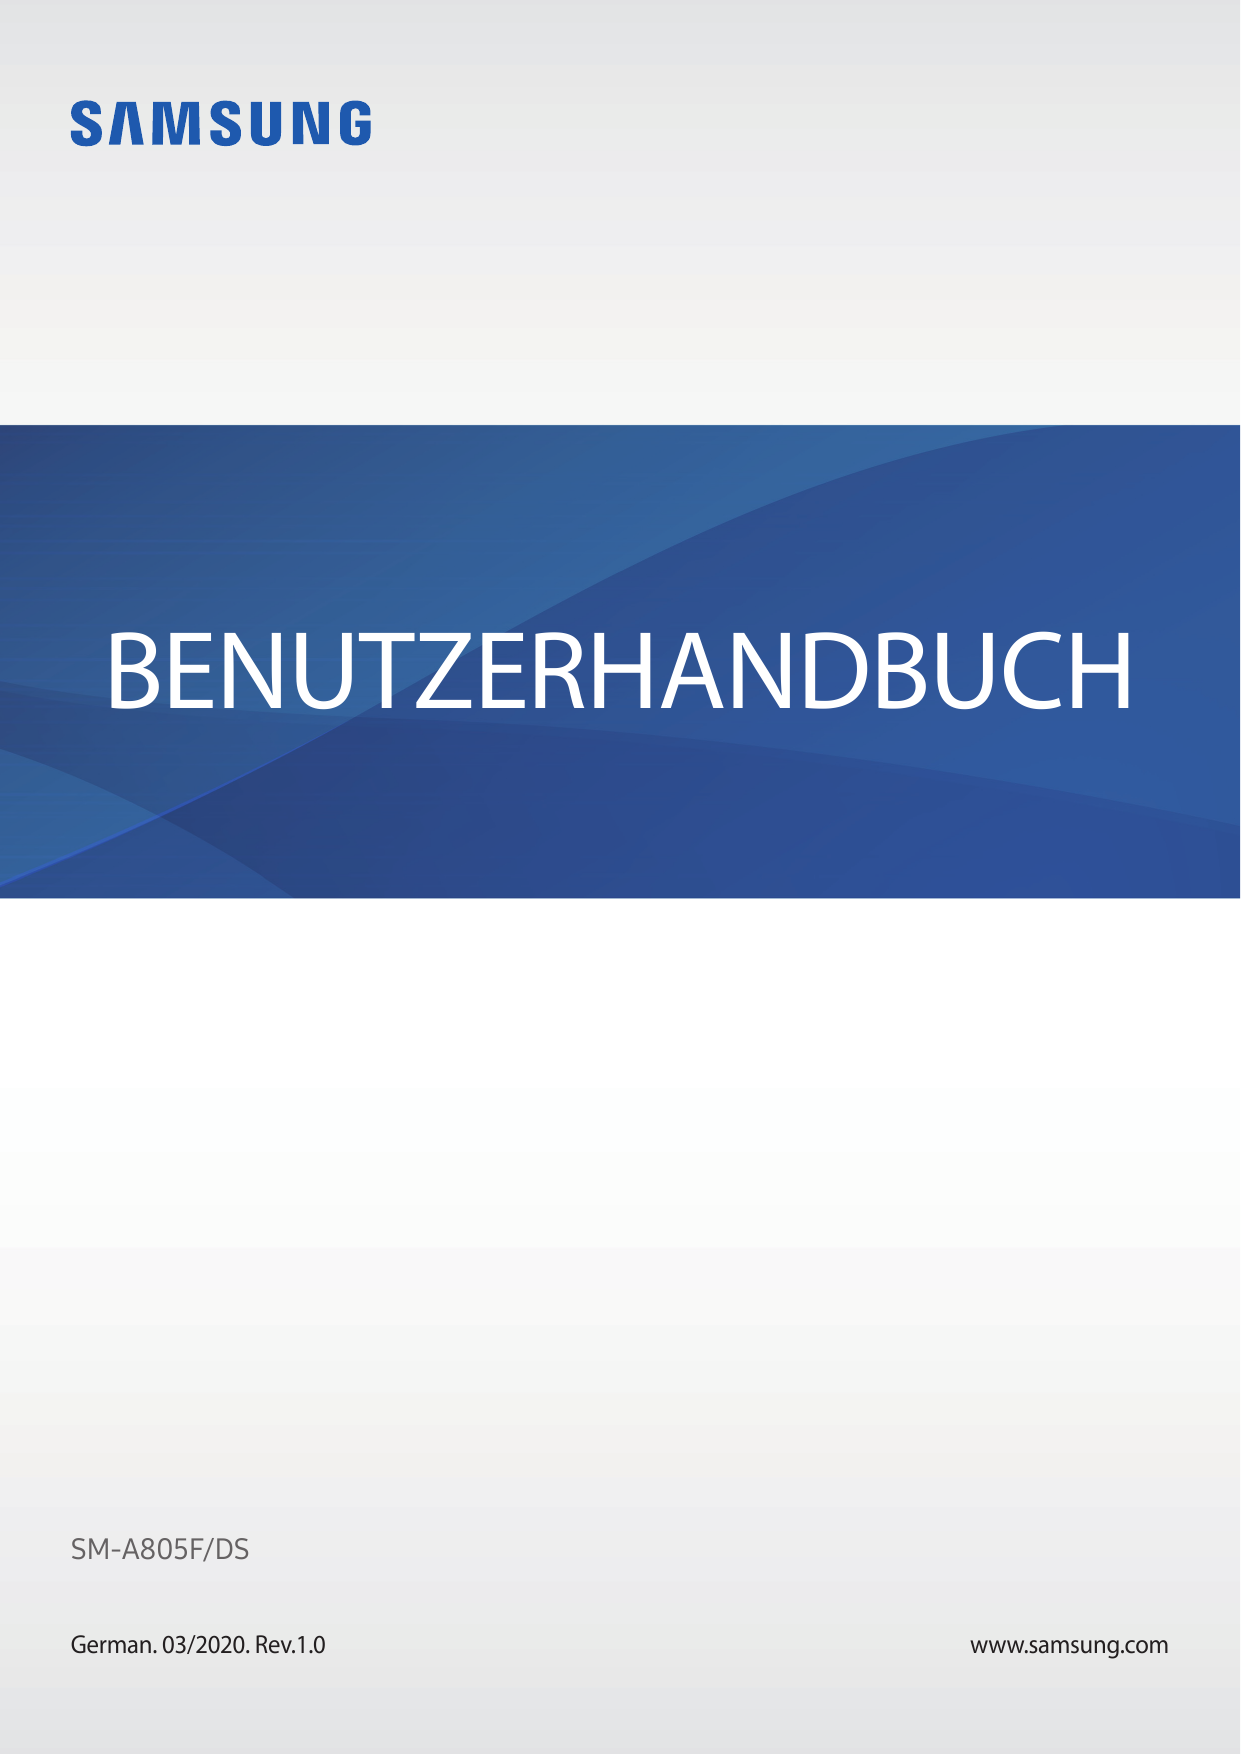 BENUTZERHANDBUCHSM-A805F/DSGerman. 03/2020. Rev.1.0www.samsung.com